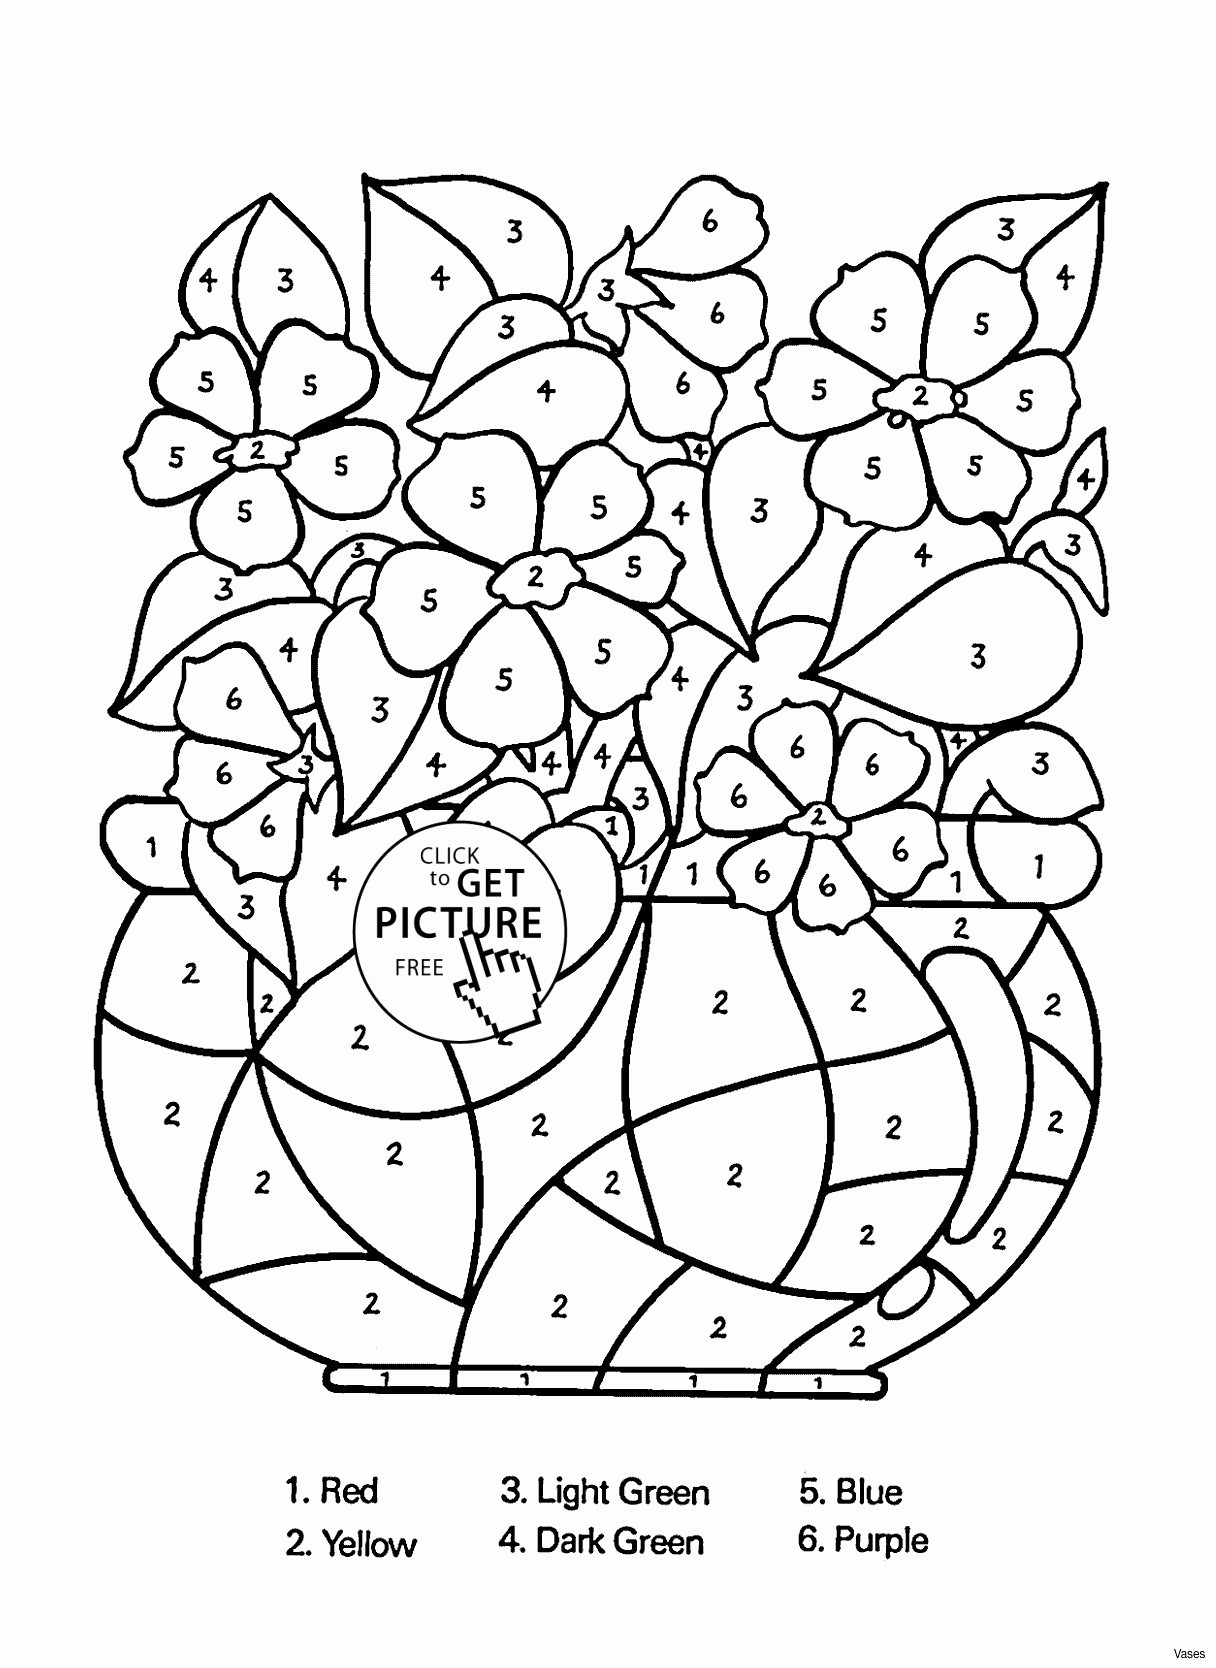 29 Stunning Navy Blue Flower Vases 2024 free download navy blue flower vases of pics of drawings easy easy to draw rose elegant vases flower vase in easy to draw rose elegant vases flower vase coloring page pages